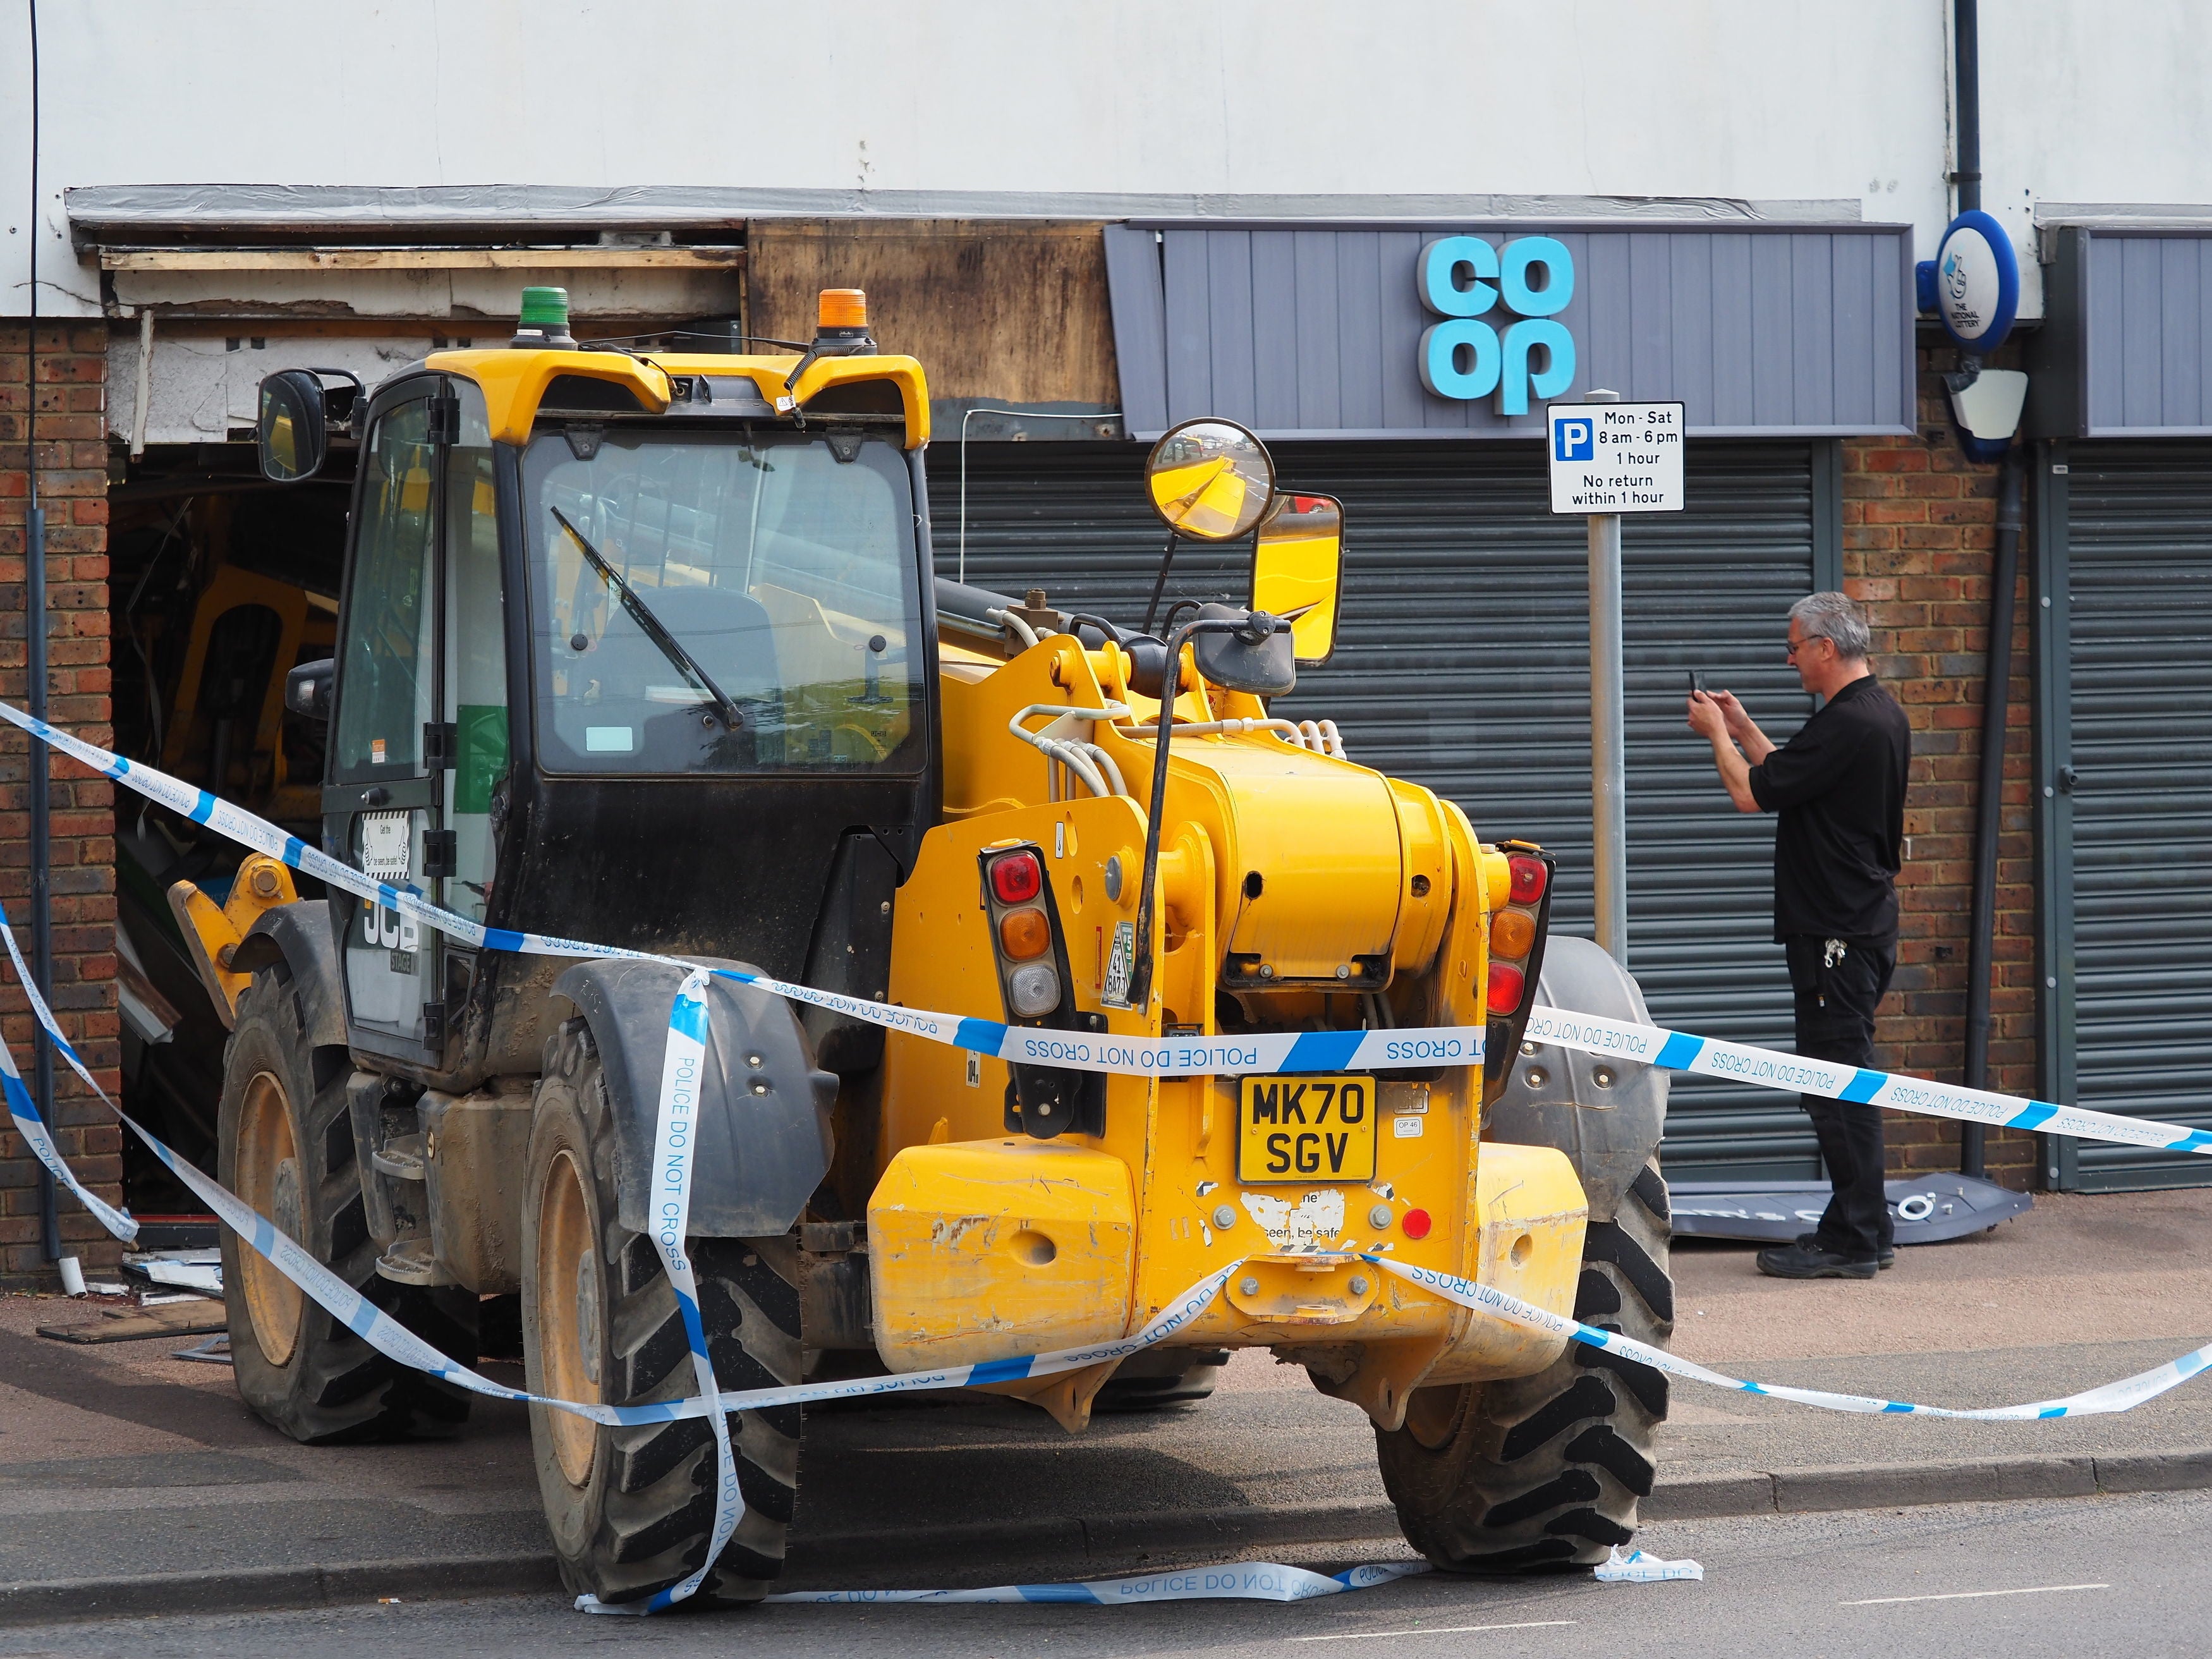 Co-op on Barnham Road saw cash machine targeted